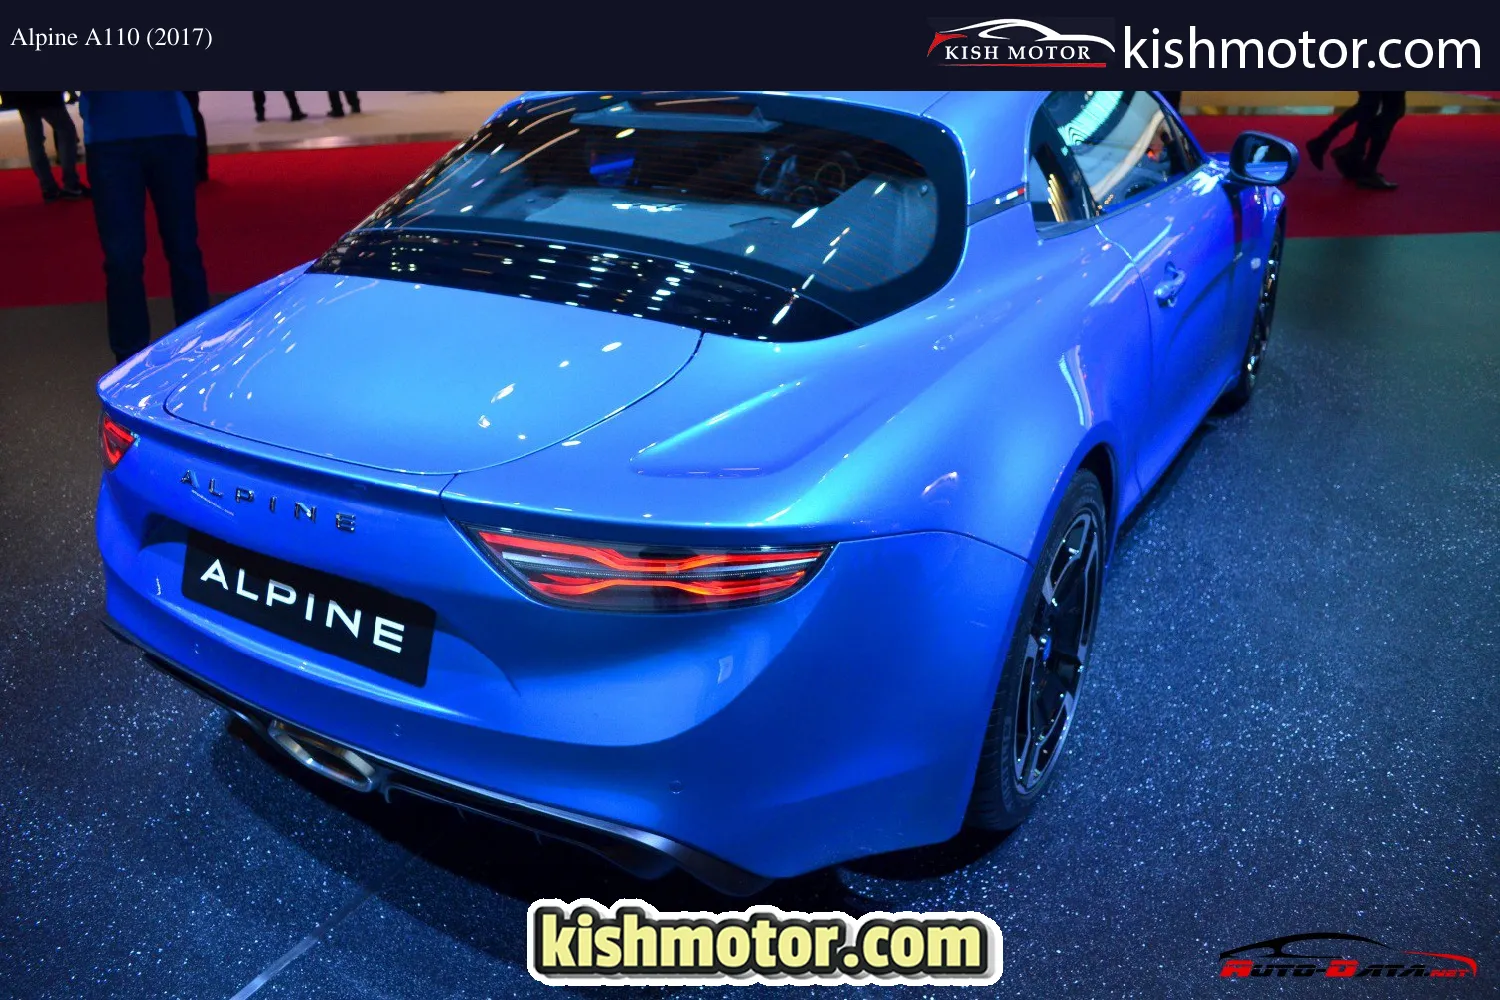 Alpine A110 (2017)